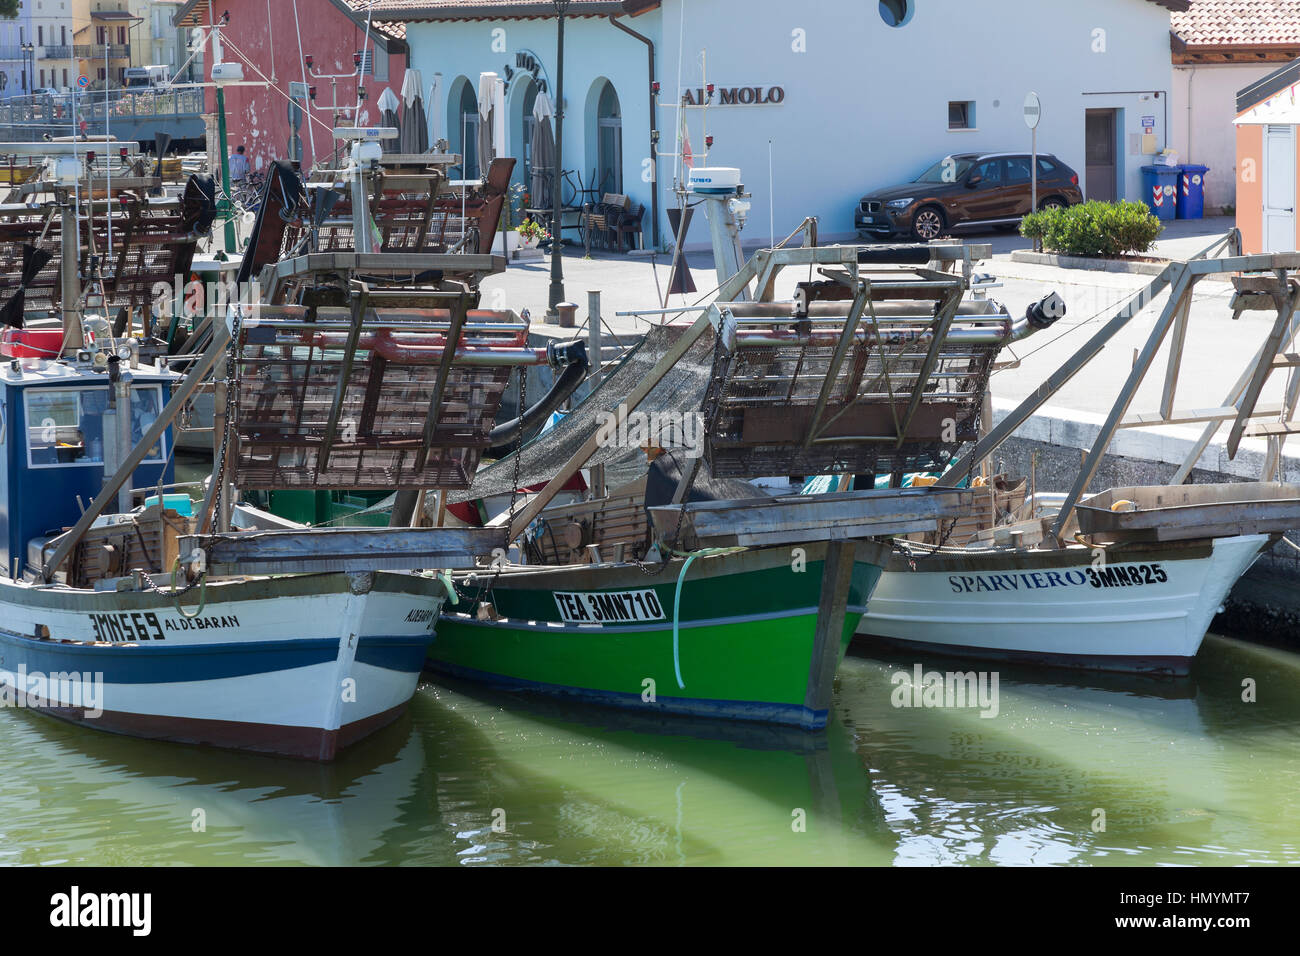 Fishing boats in dock, Marano lagunare, Friuli Stock Photo